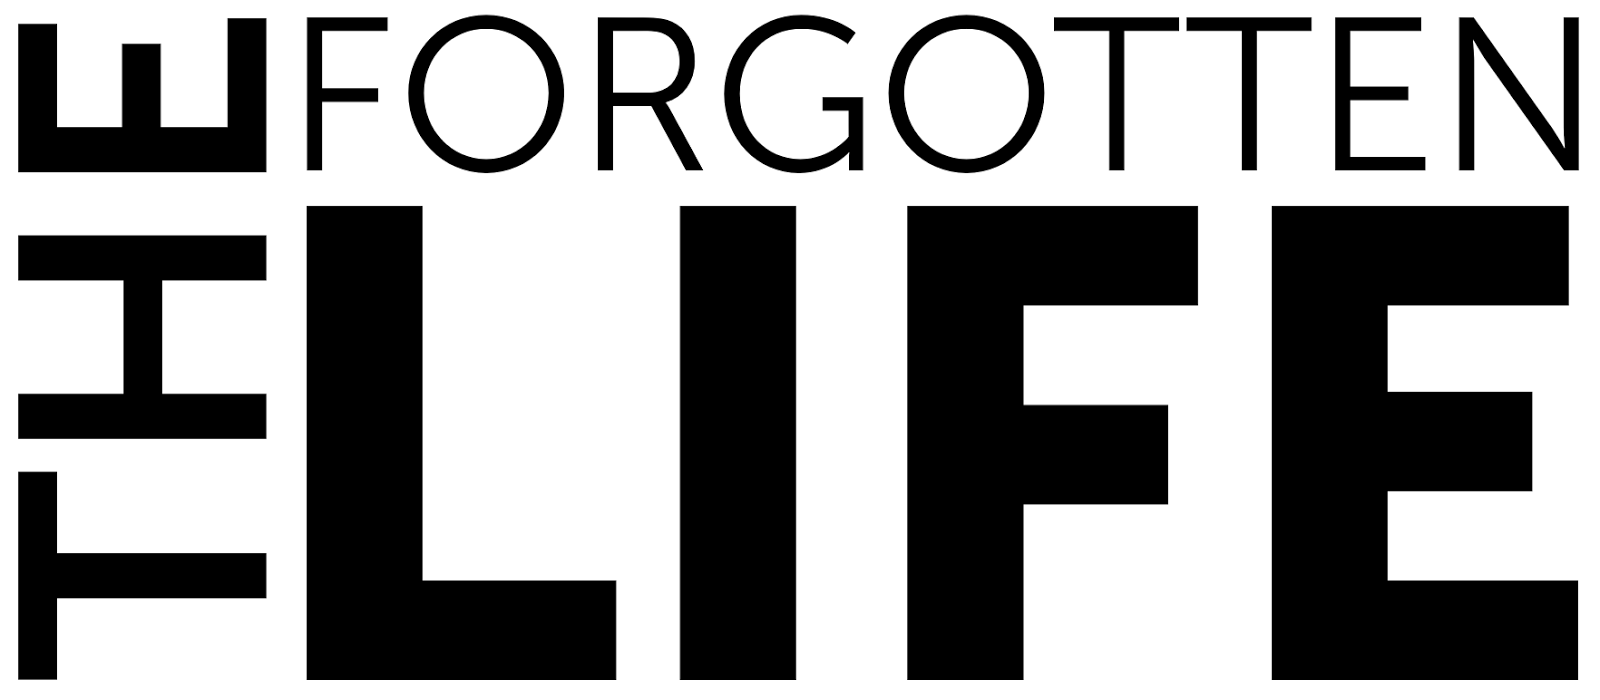 The Forgotten Life